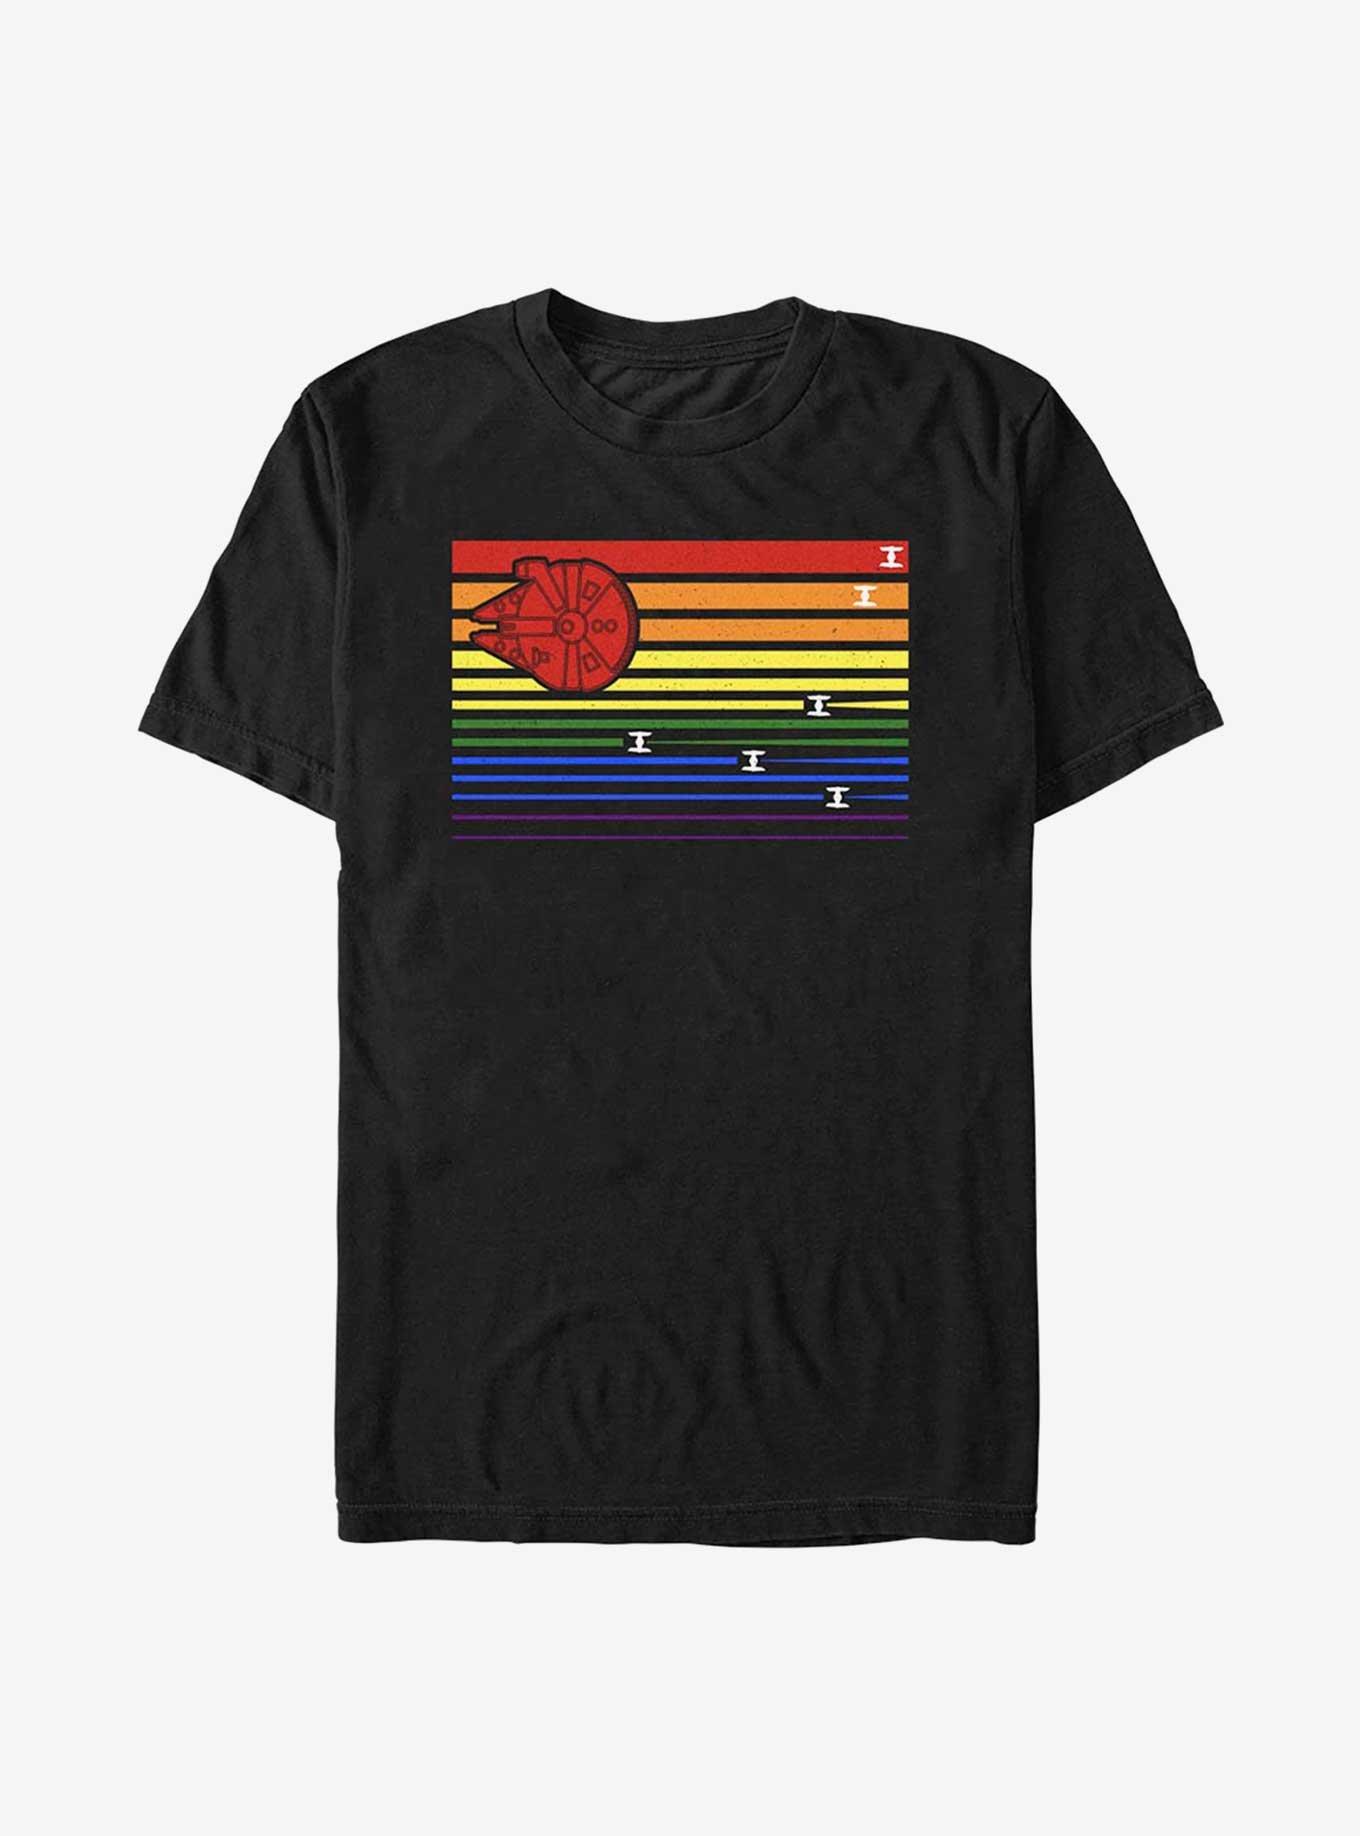 Star Wars Rainbow Attack Pride T-Shirt